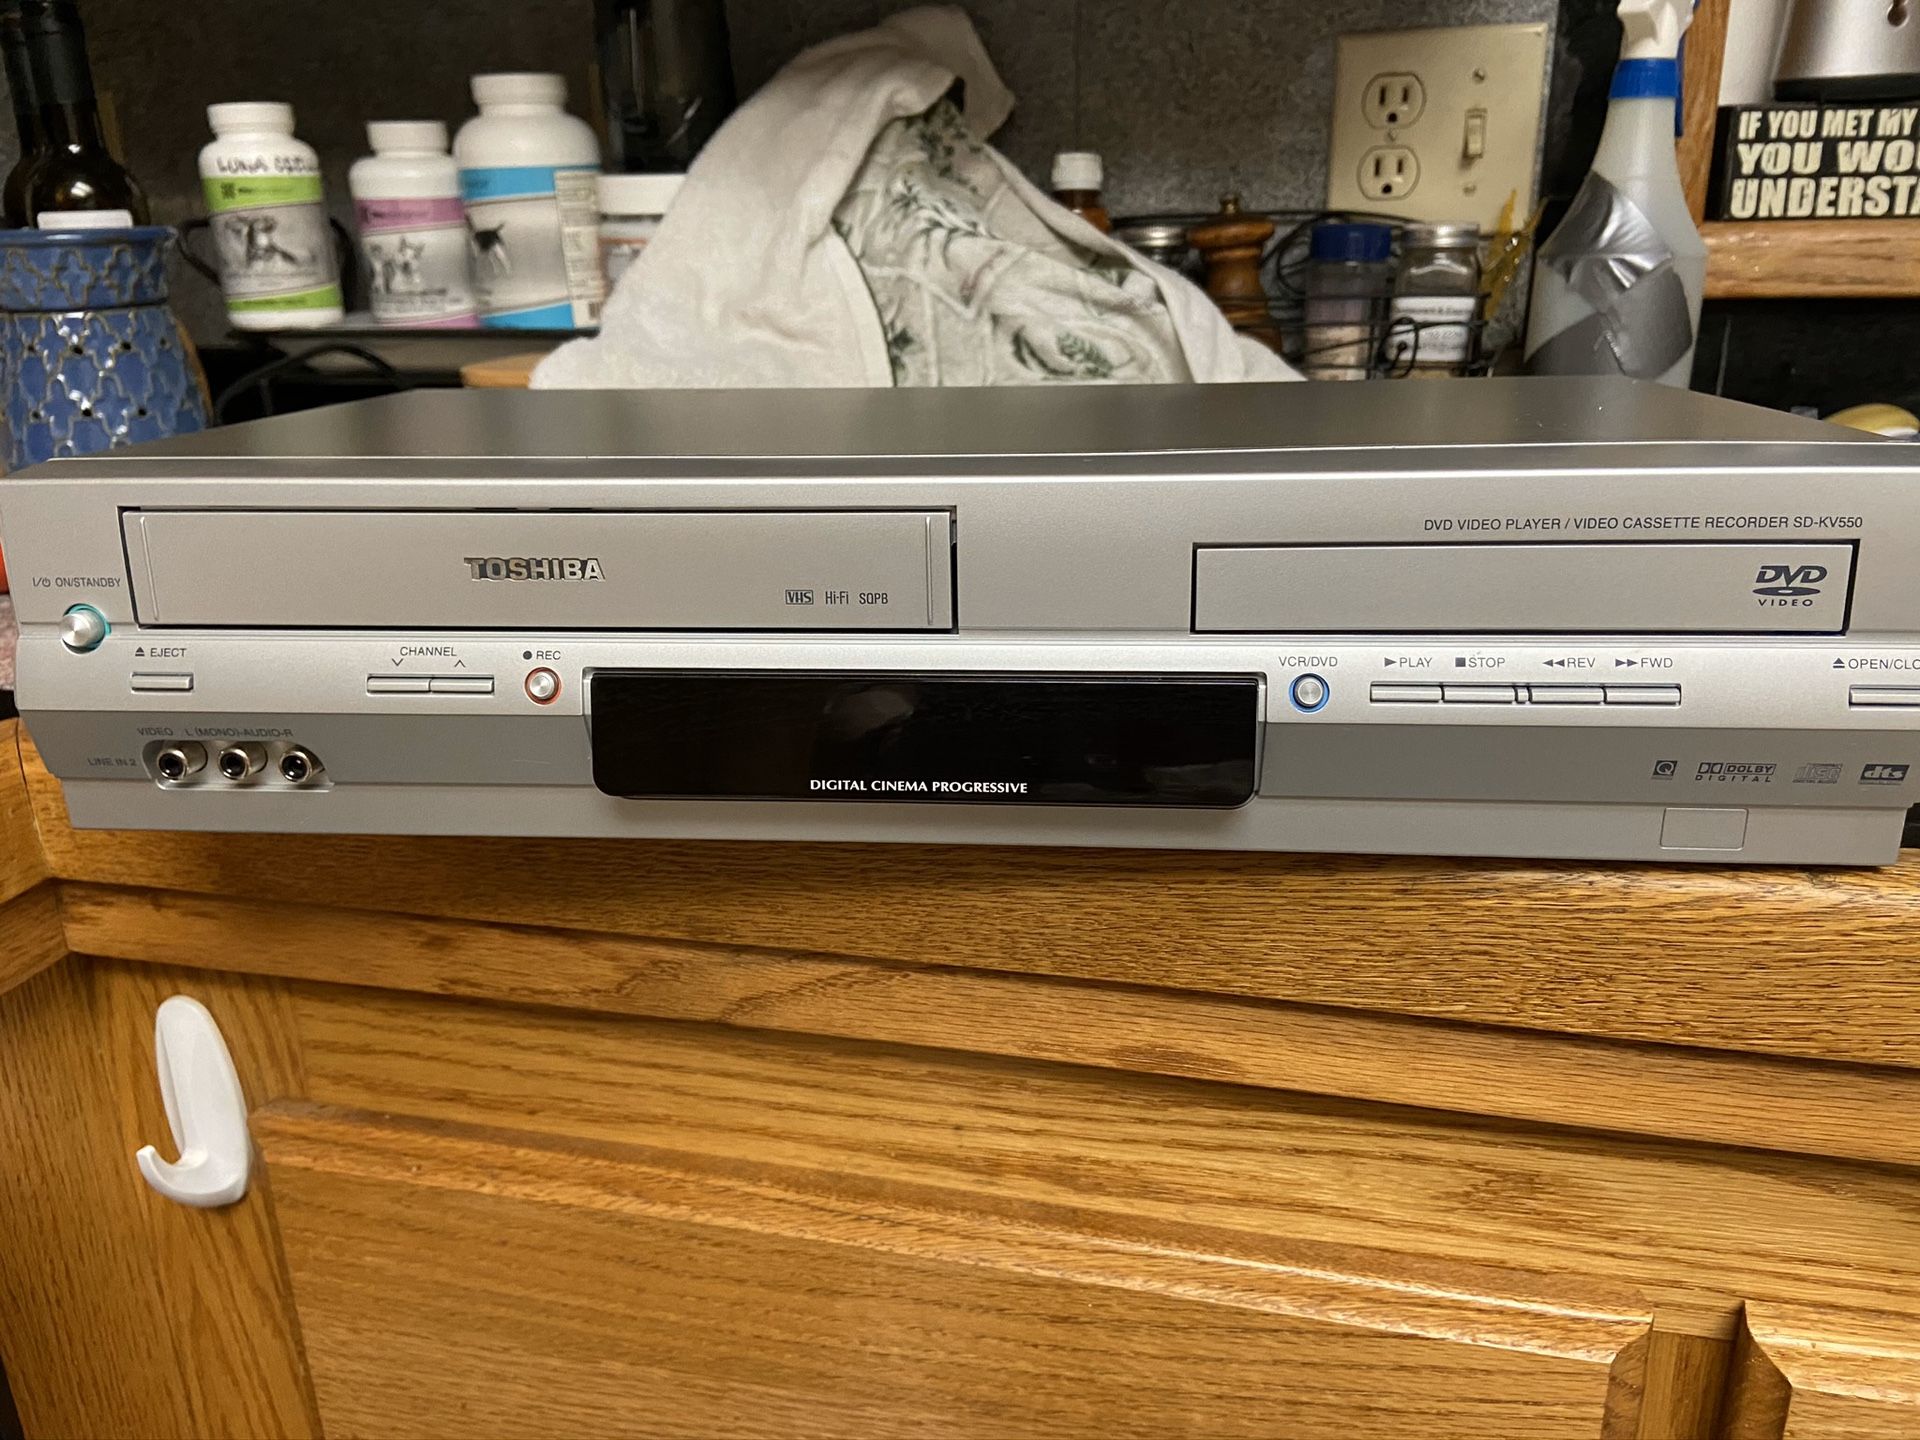 Toshiba VCR/DVD Player- Brand New, no box